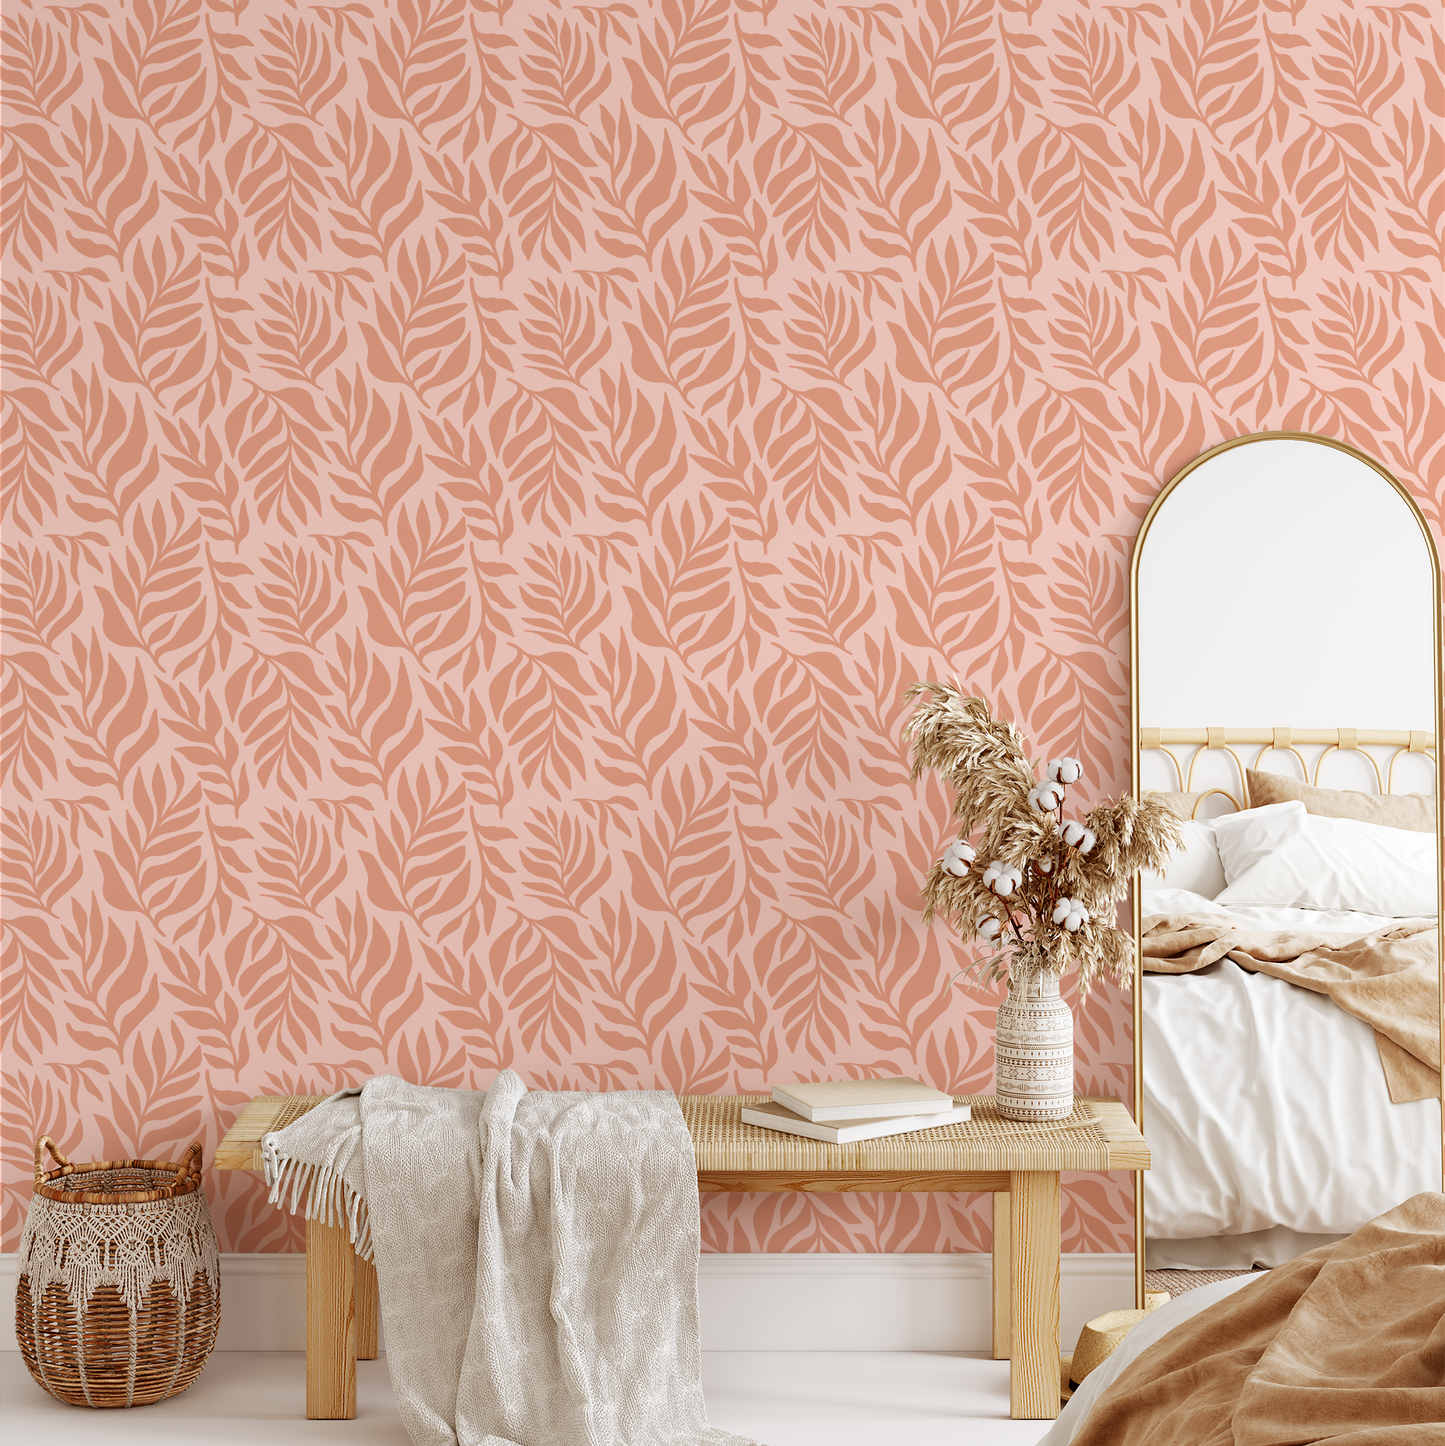 Foliage Wallpaper - Peach